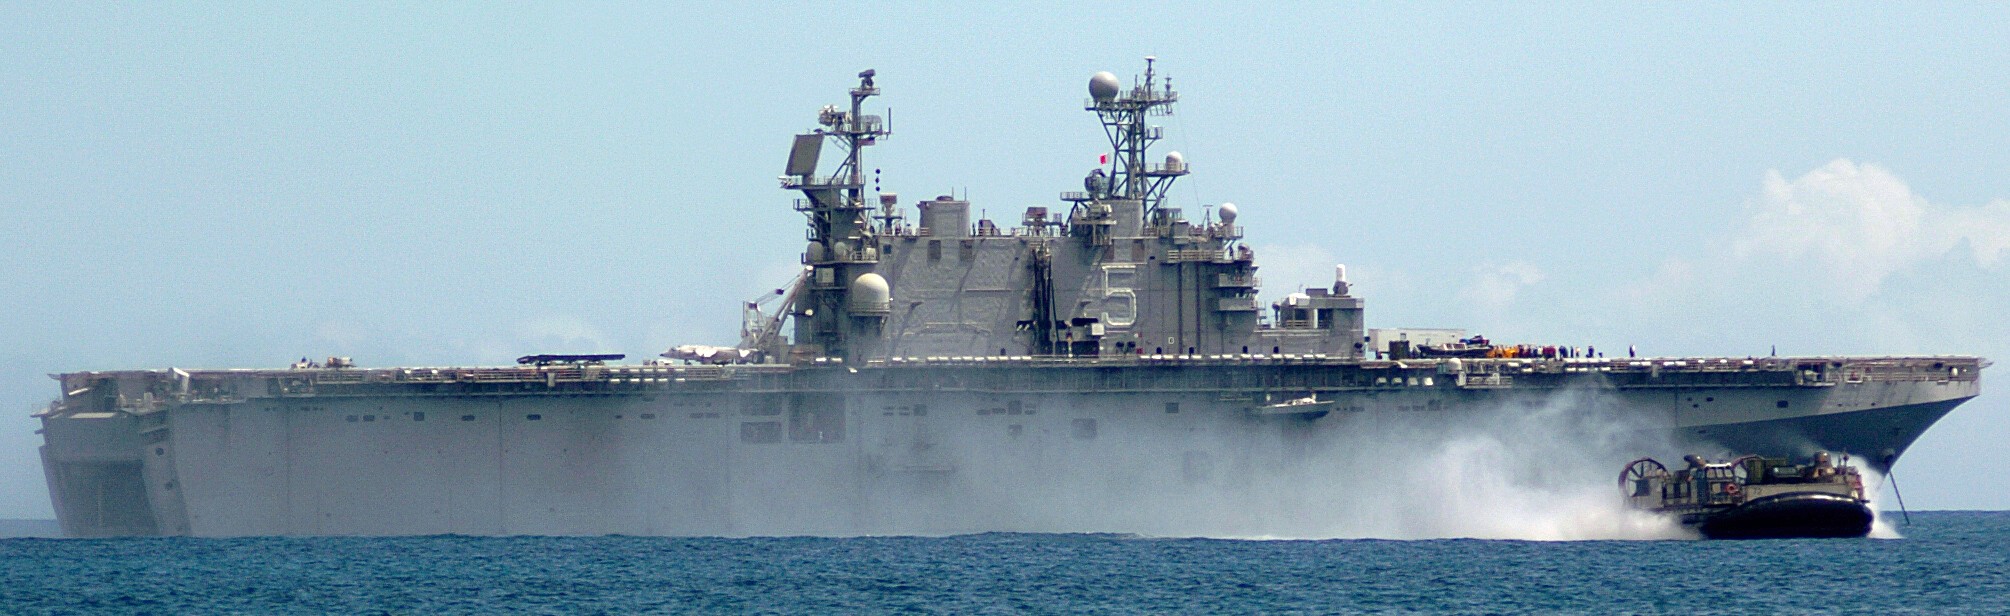 lha-5 uss peleliu tarawa class amphibious assault ship landing helicopter us navy marines 07